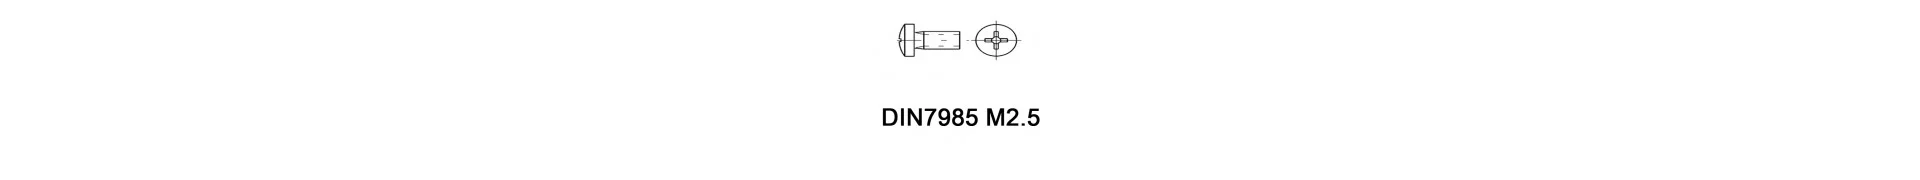 DIN7985 M2.5